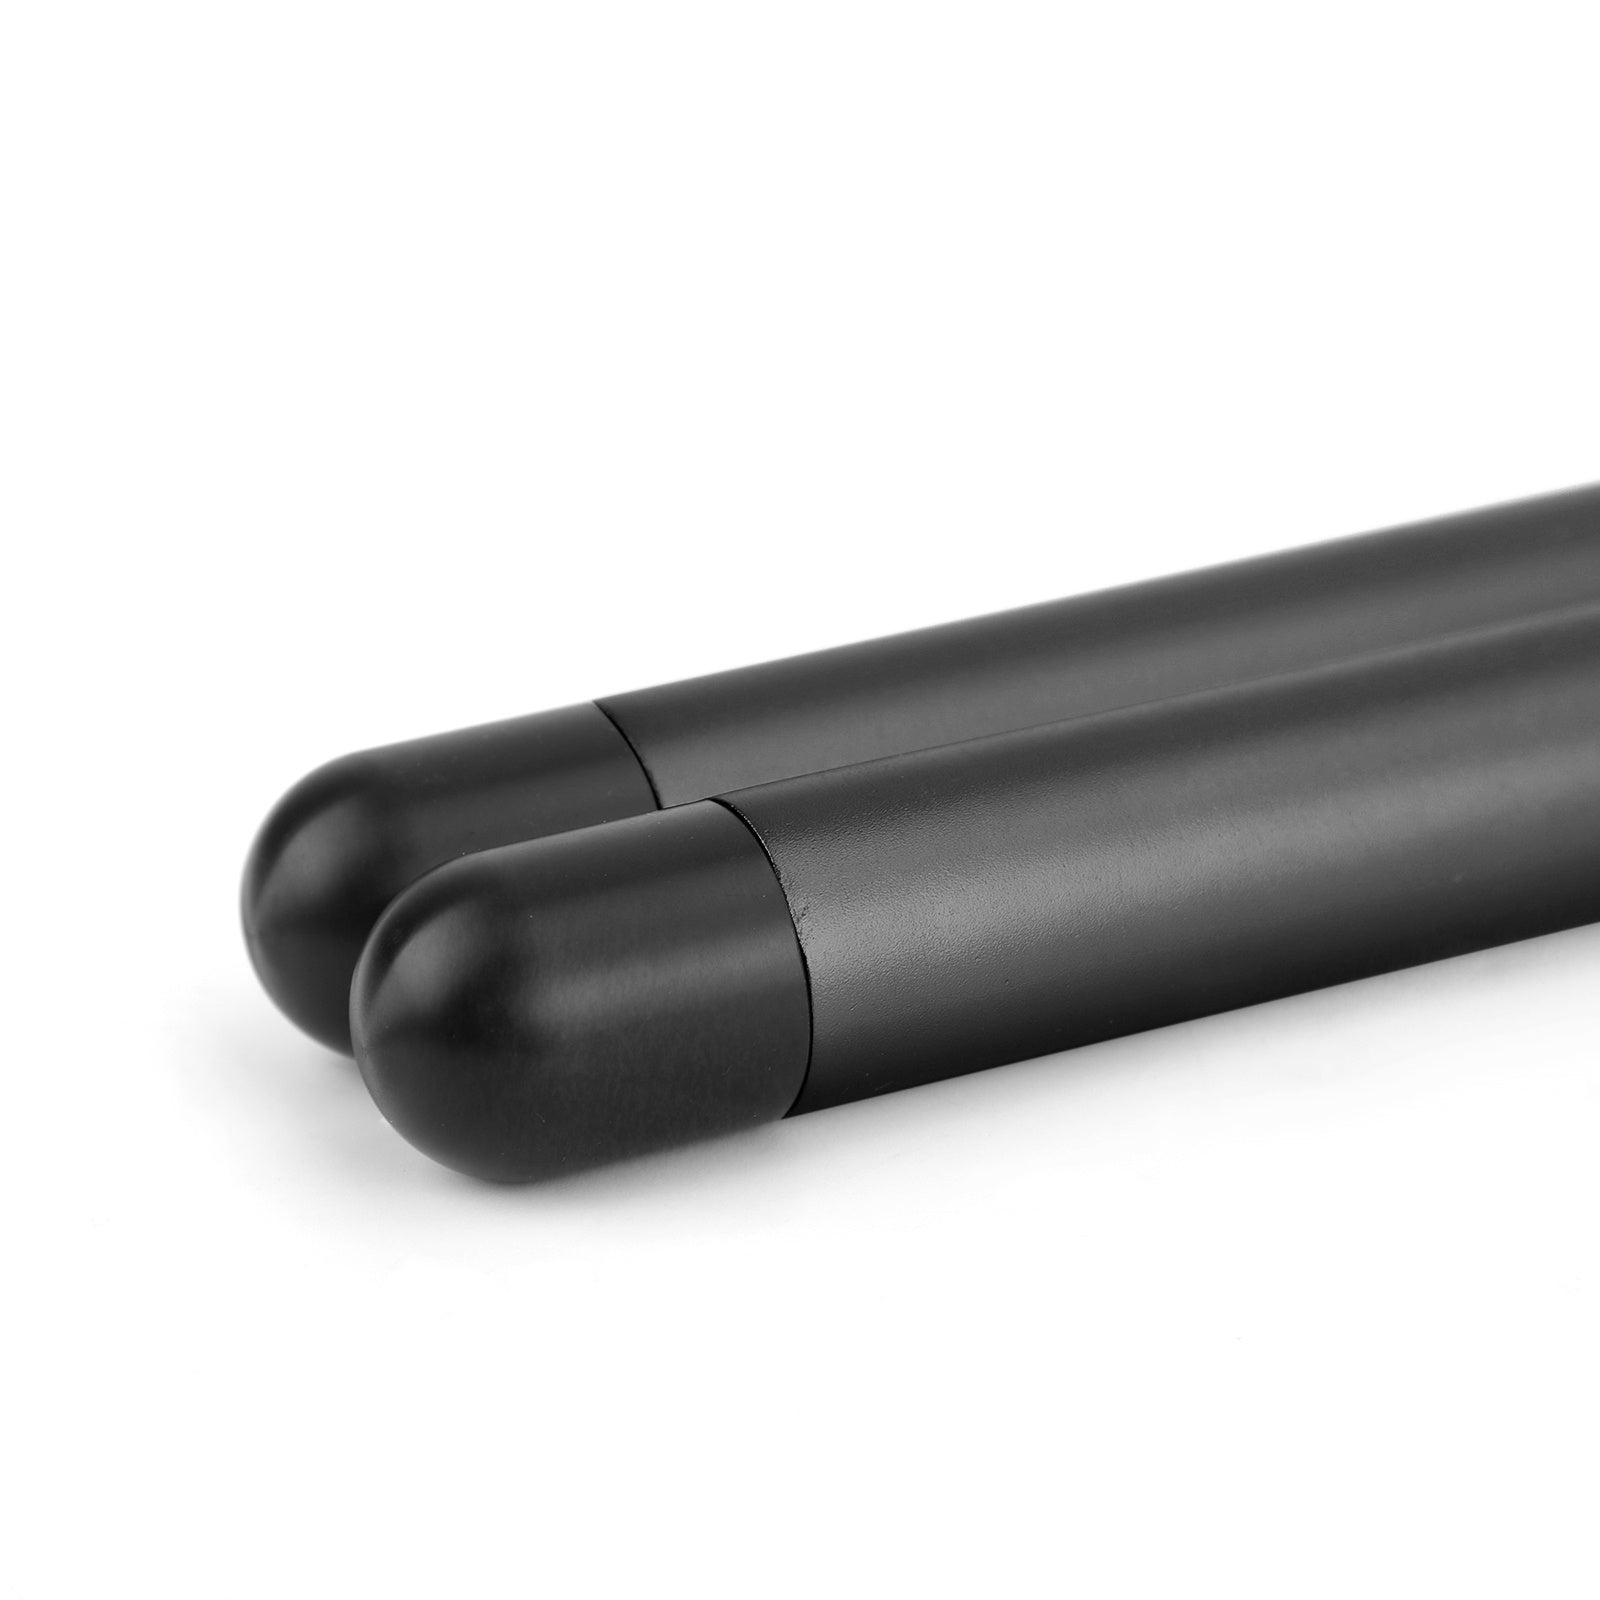 Kit manubrio tubo forcella universale regolabile girevole in billet CNC 52mm